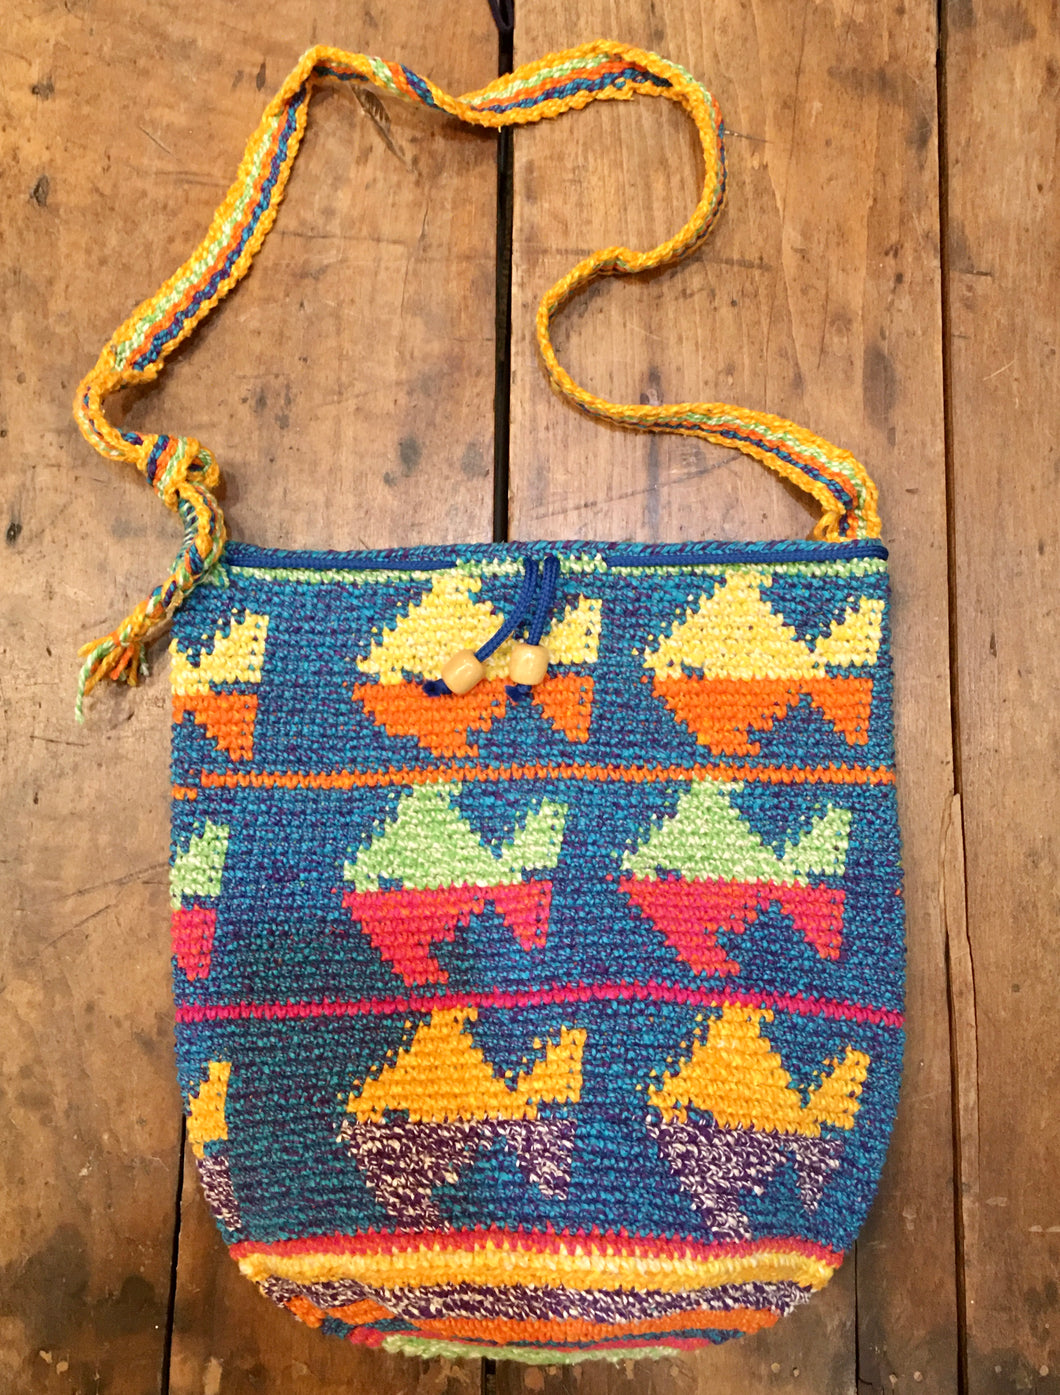 PURSE - Crocheted Highlands Bag